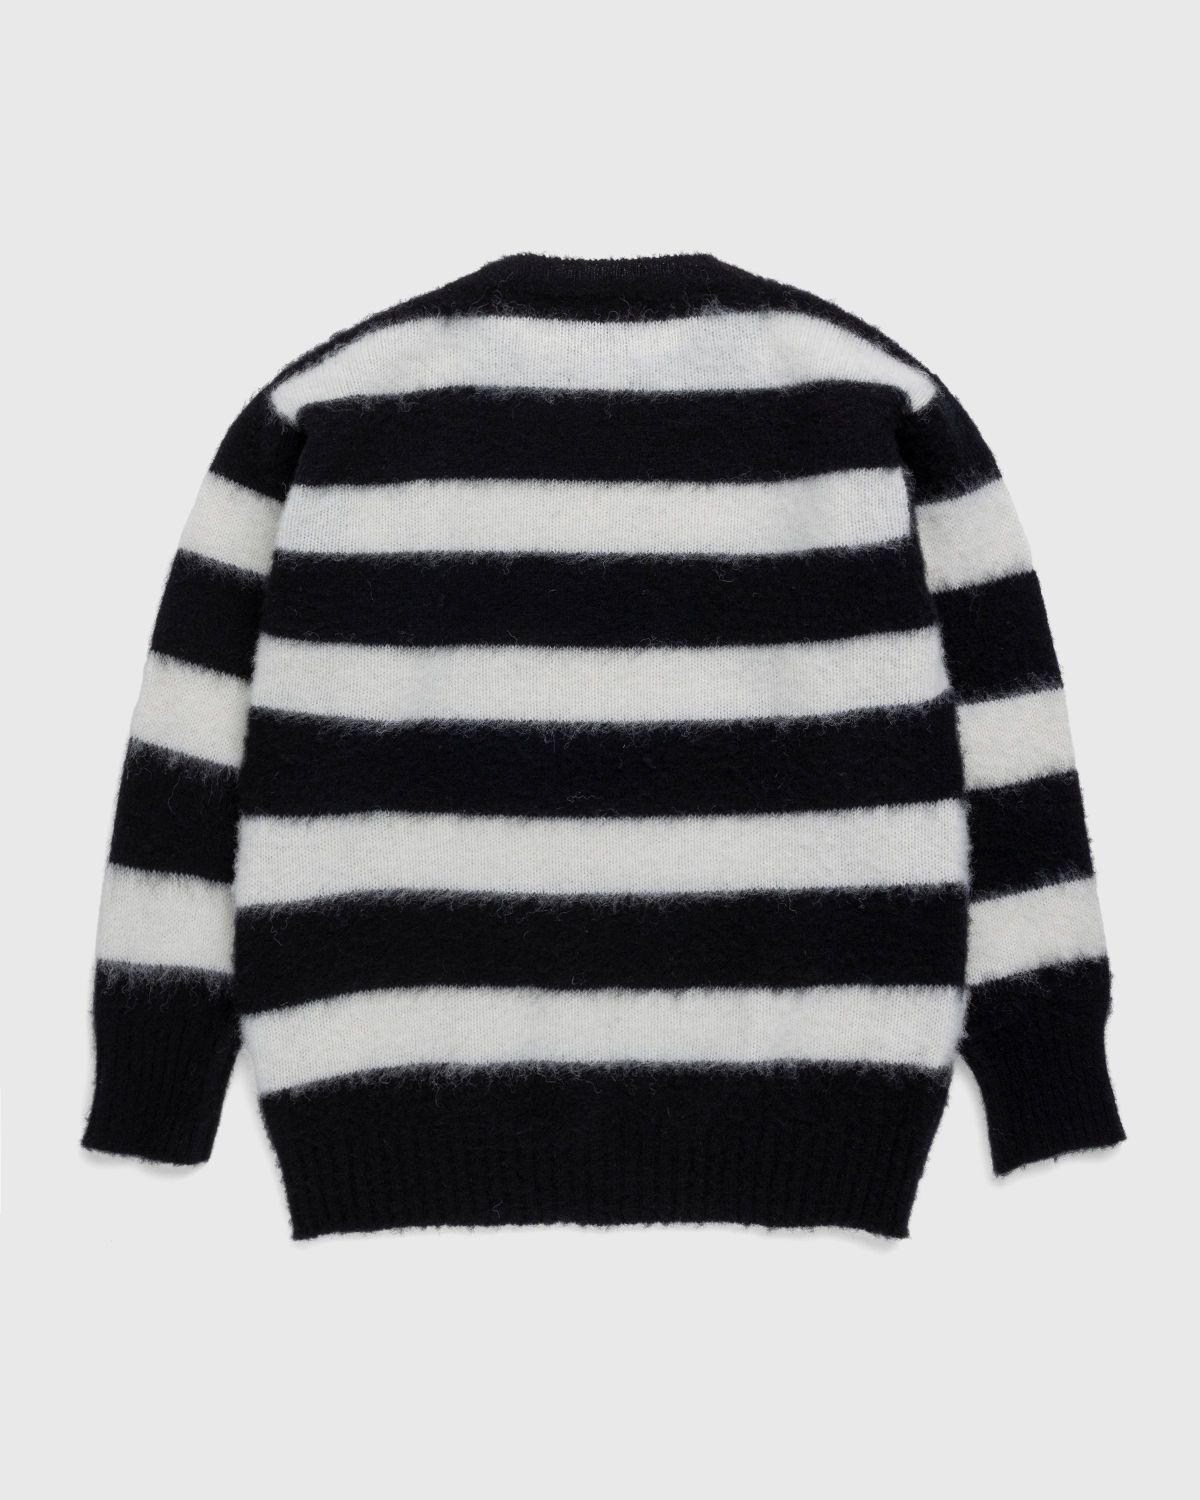 J. Press x Highsnobiety – Shaggy Dog Stripe Sweater Black/Cream - Crewnecks - Multi - Image 2